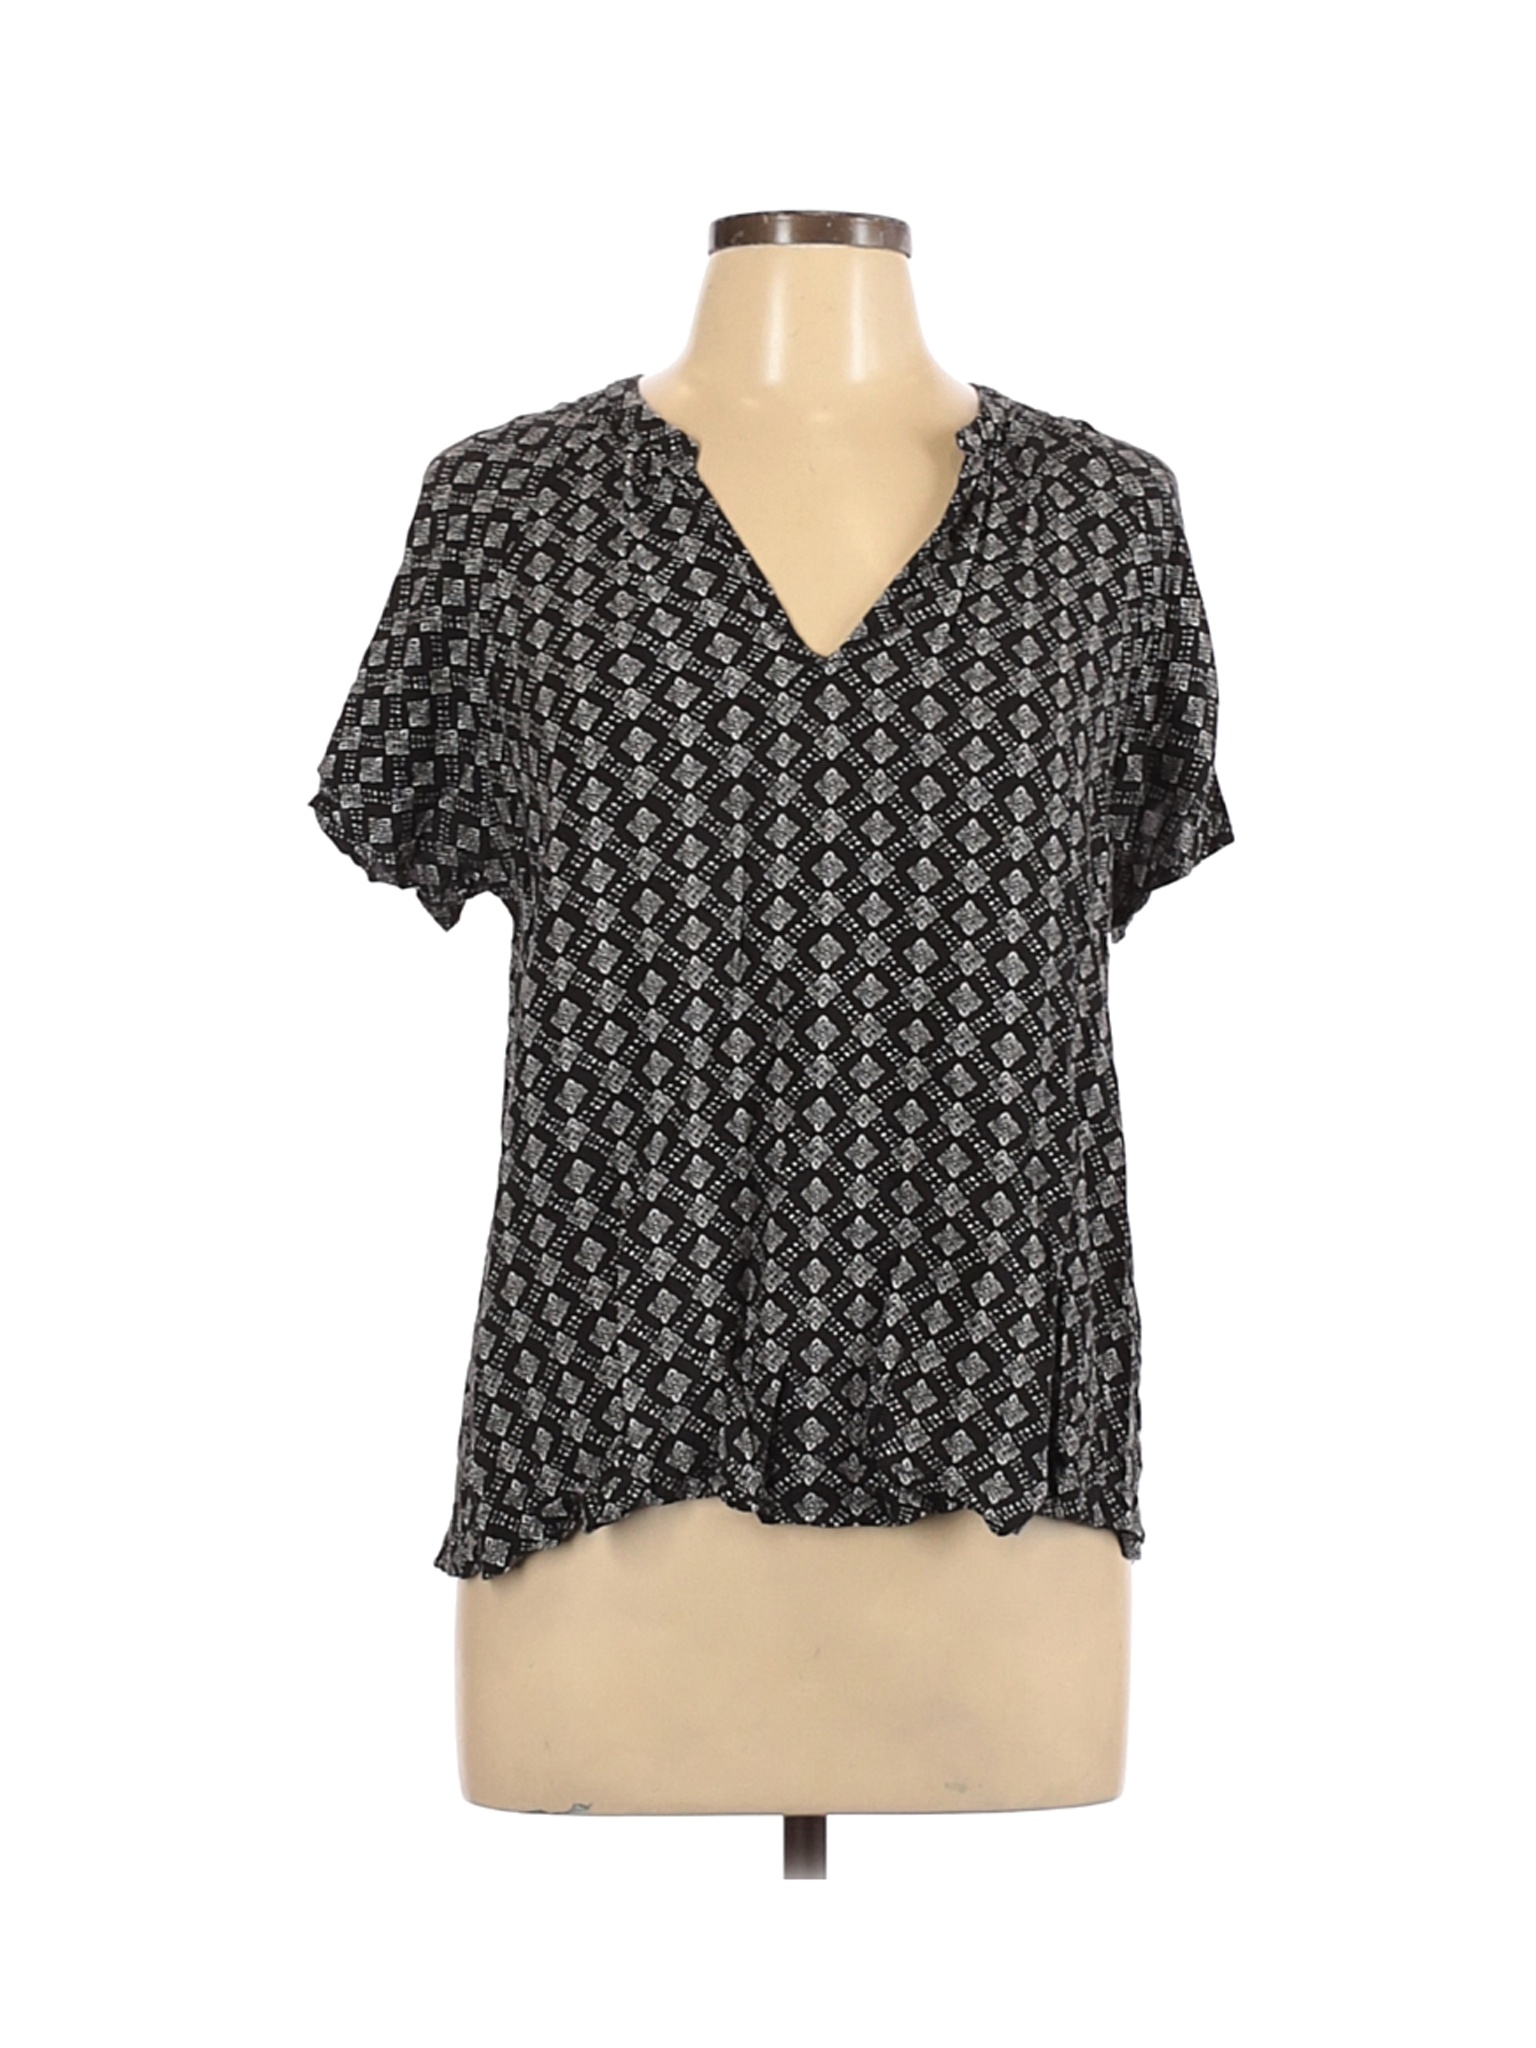 Old Navy Women Black Short Sleeve Blouse L | eBay